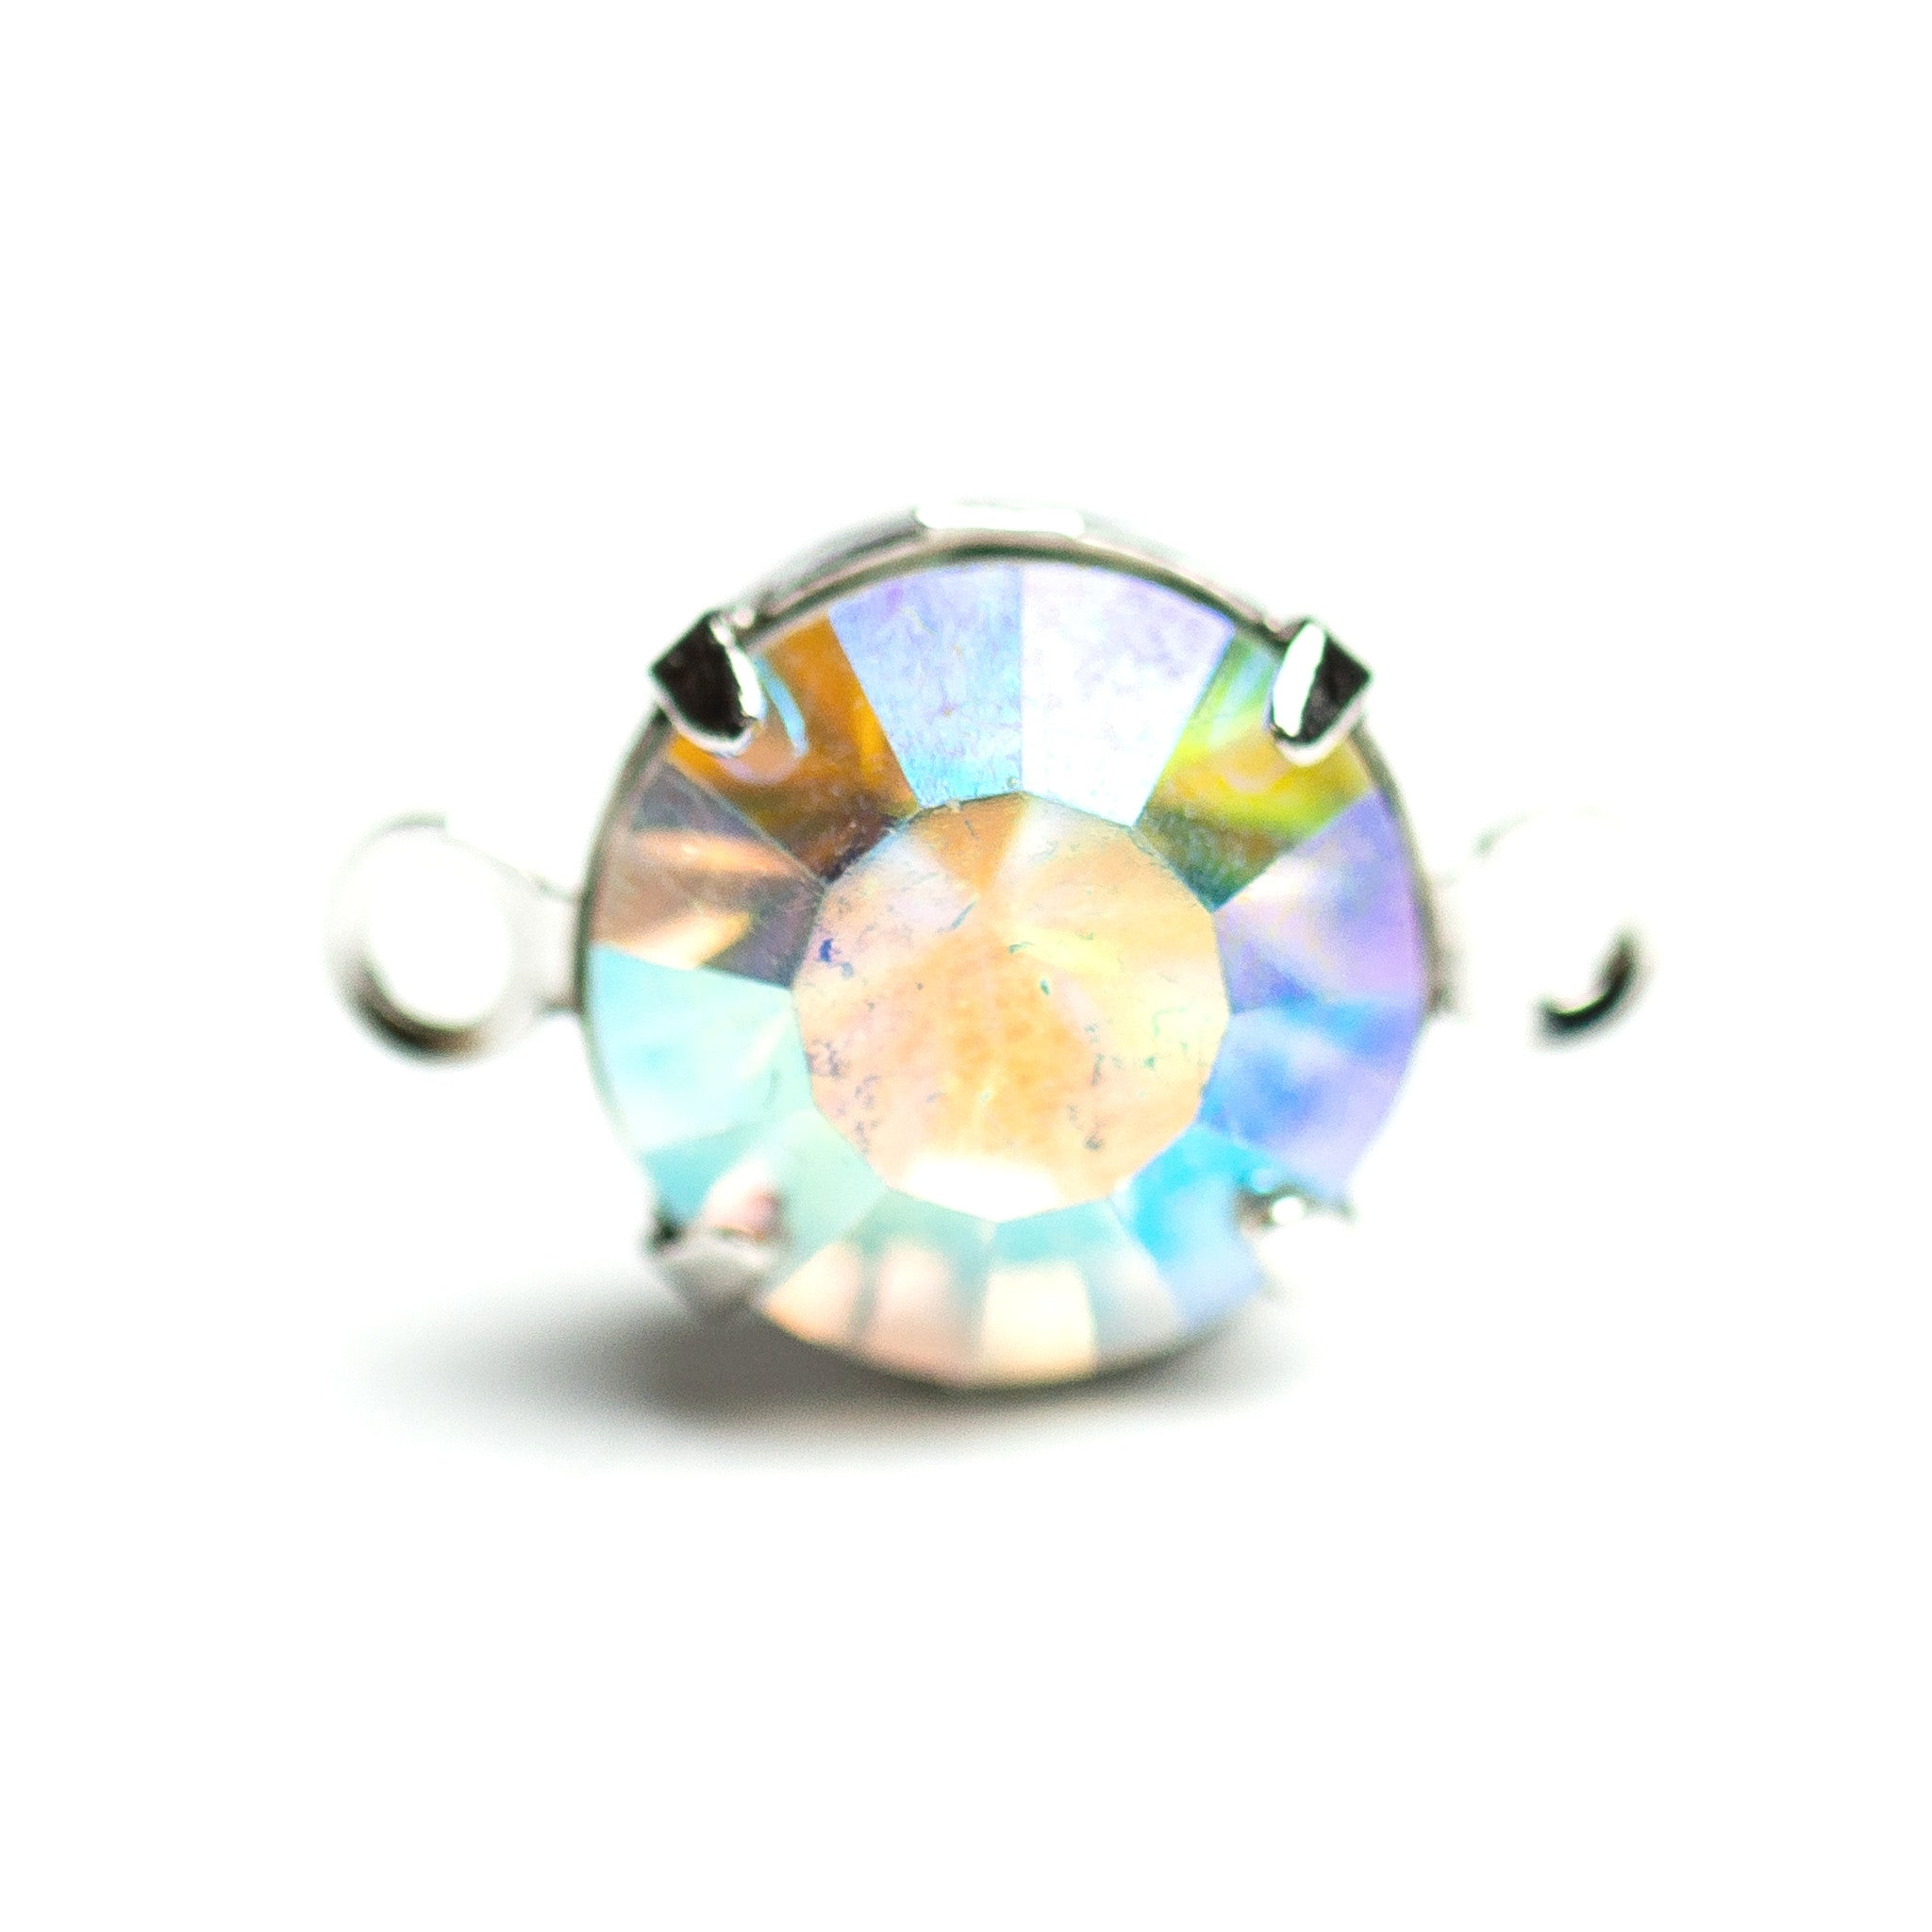 Pp32 2-Ring Set Crystal Ab/Rhodium (36 pieces)